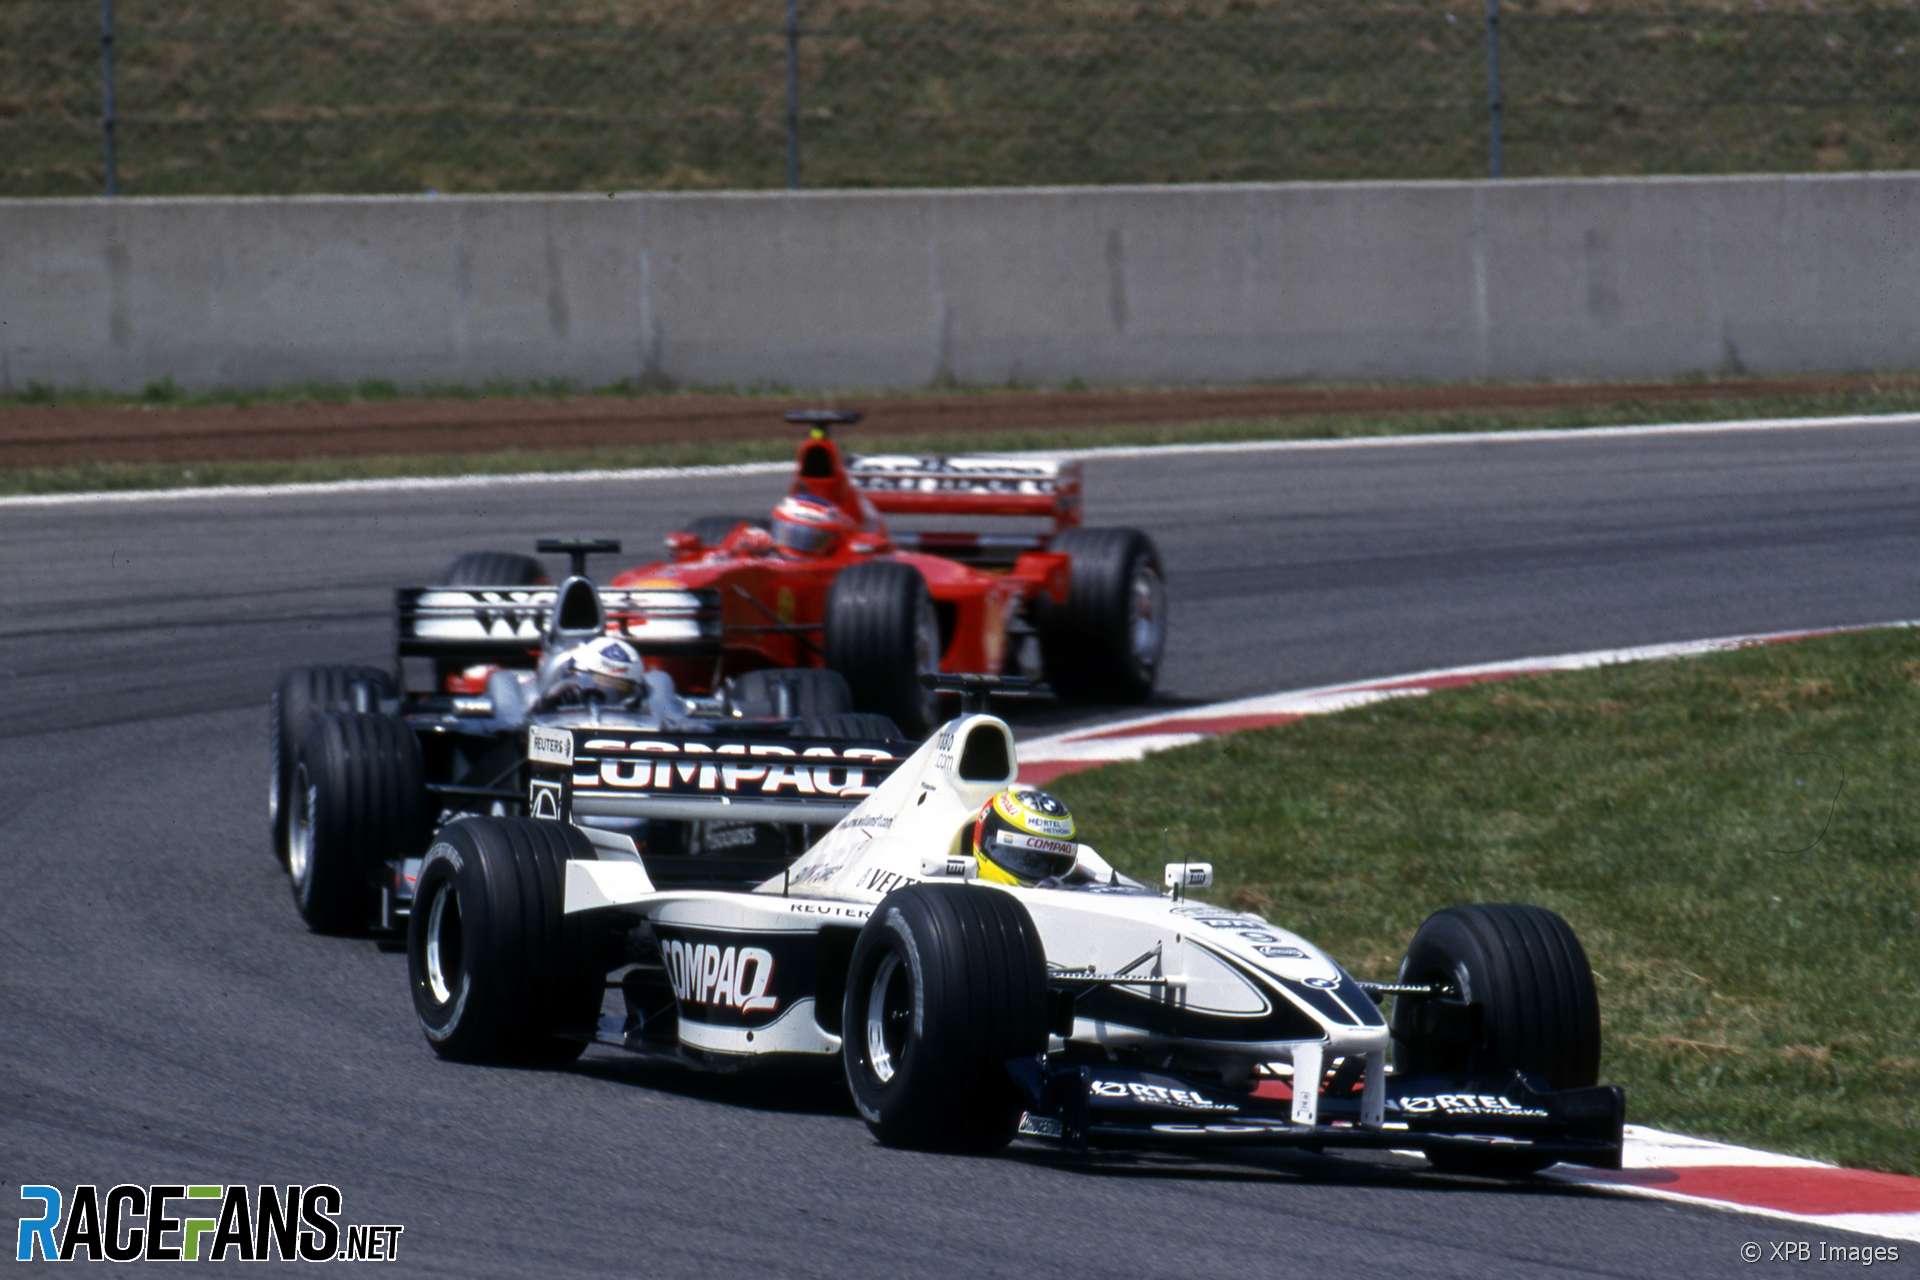 Ralf Schumacher, David Coulthard, Rubens Barrichello, Circuit de Catalunya, 2000